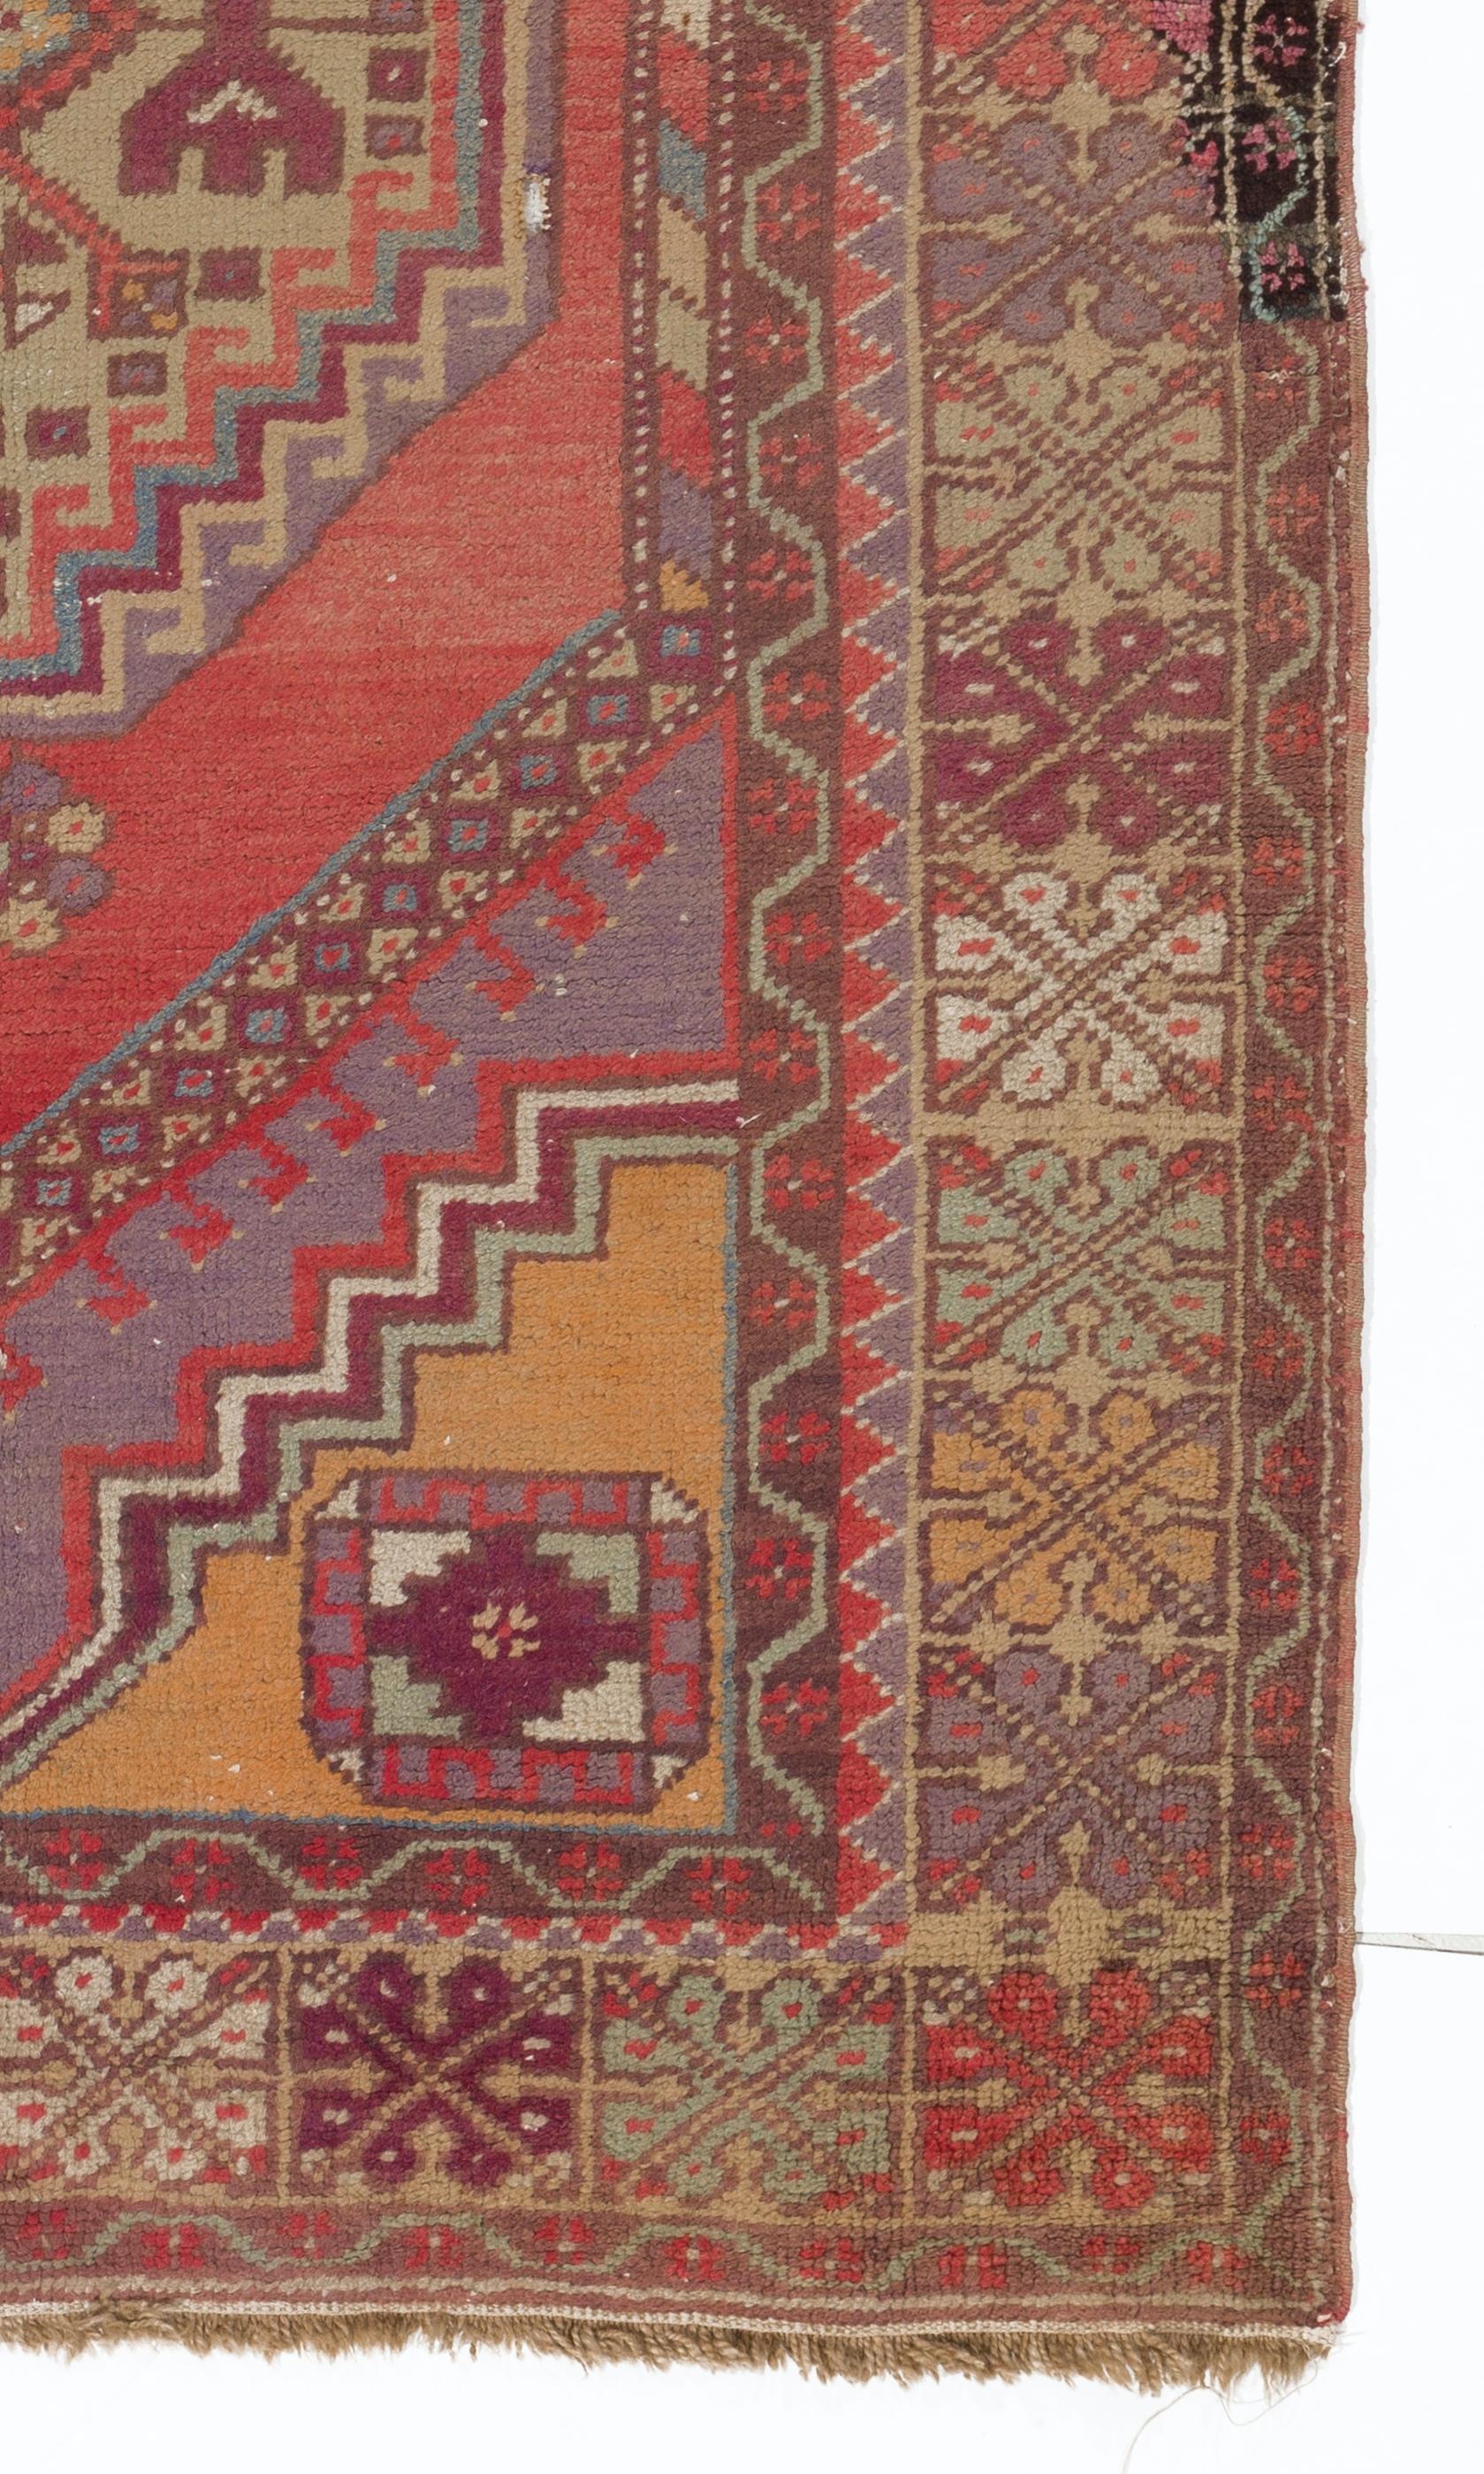 20th Century 3.8x6.5 Ft Unique Turkish Village Rug, Vintage Hand-Knotted Oriental Wool Carpet For Sale